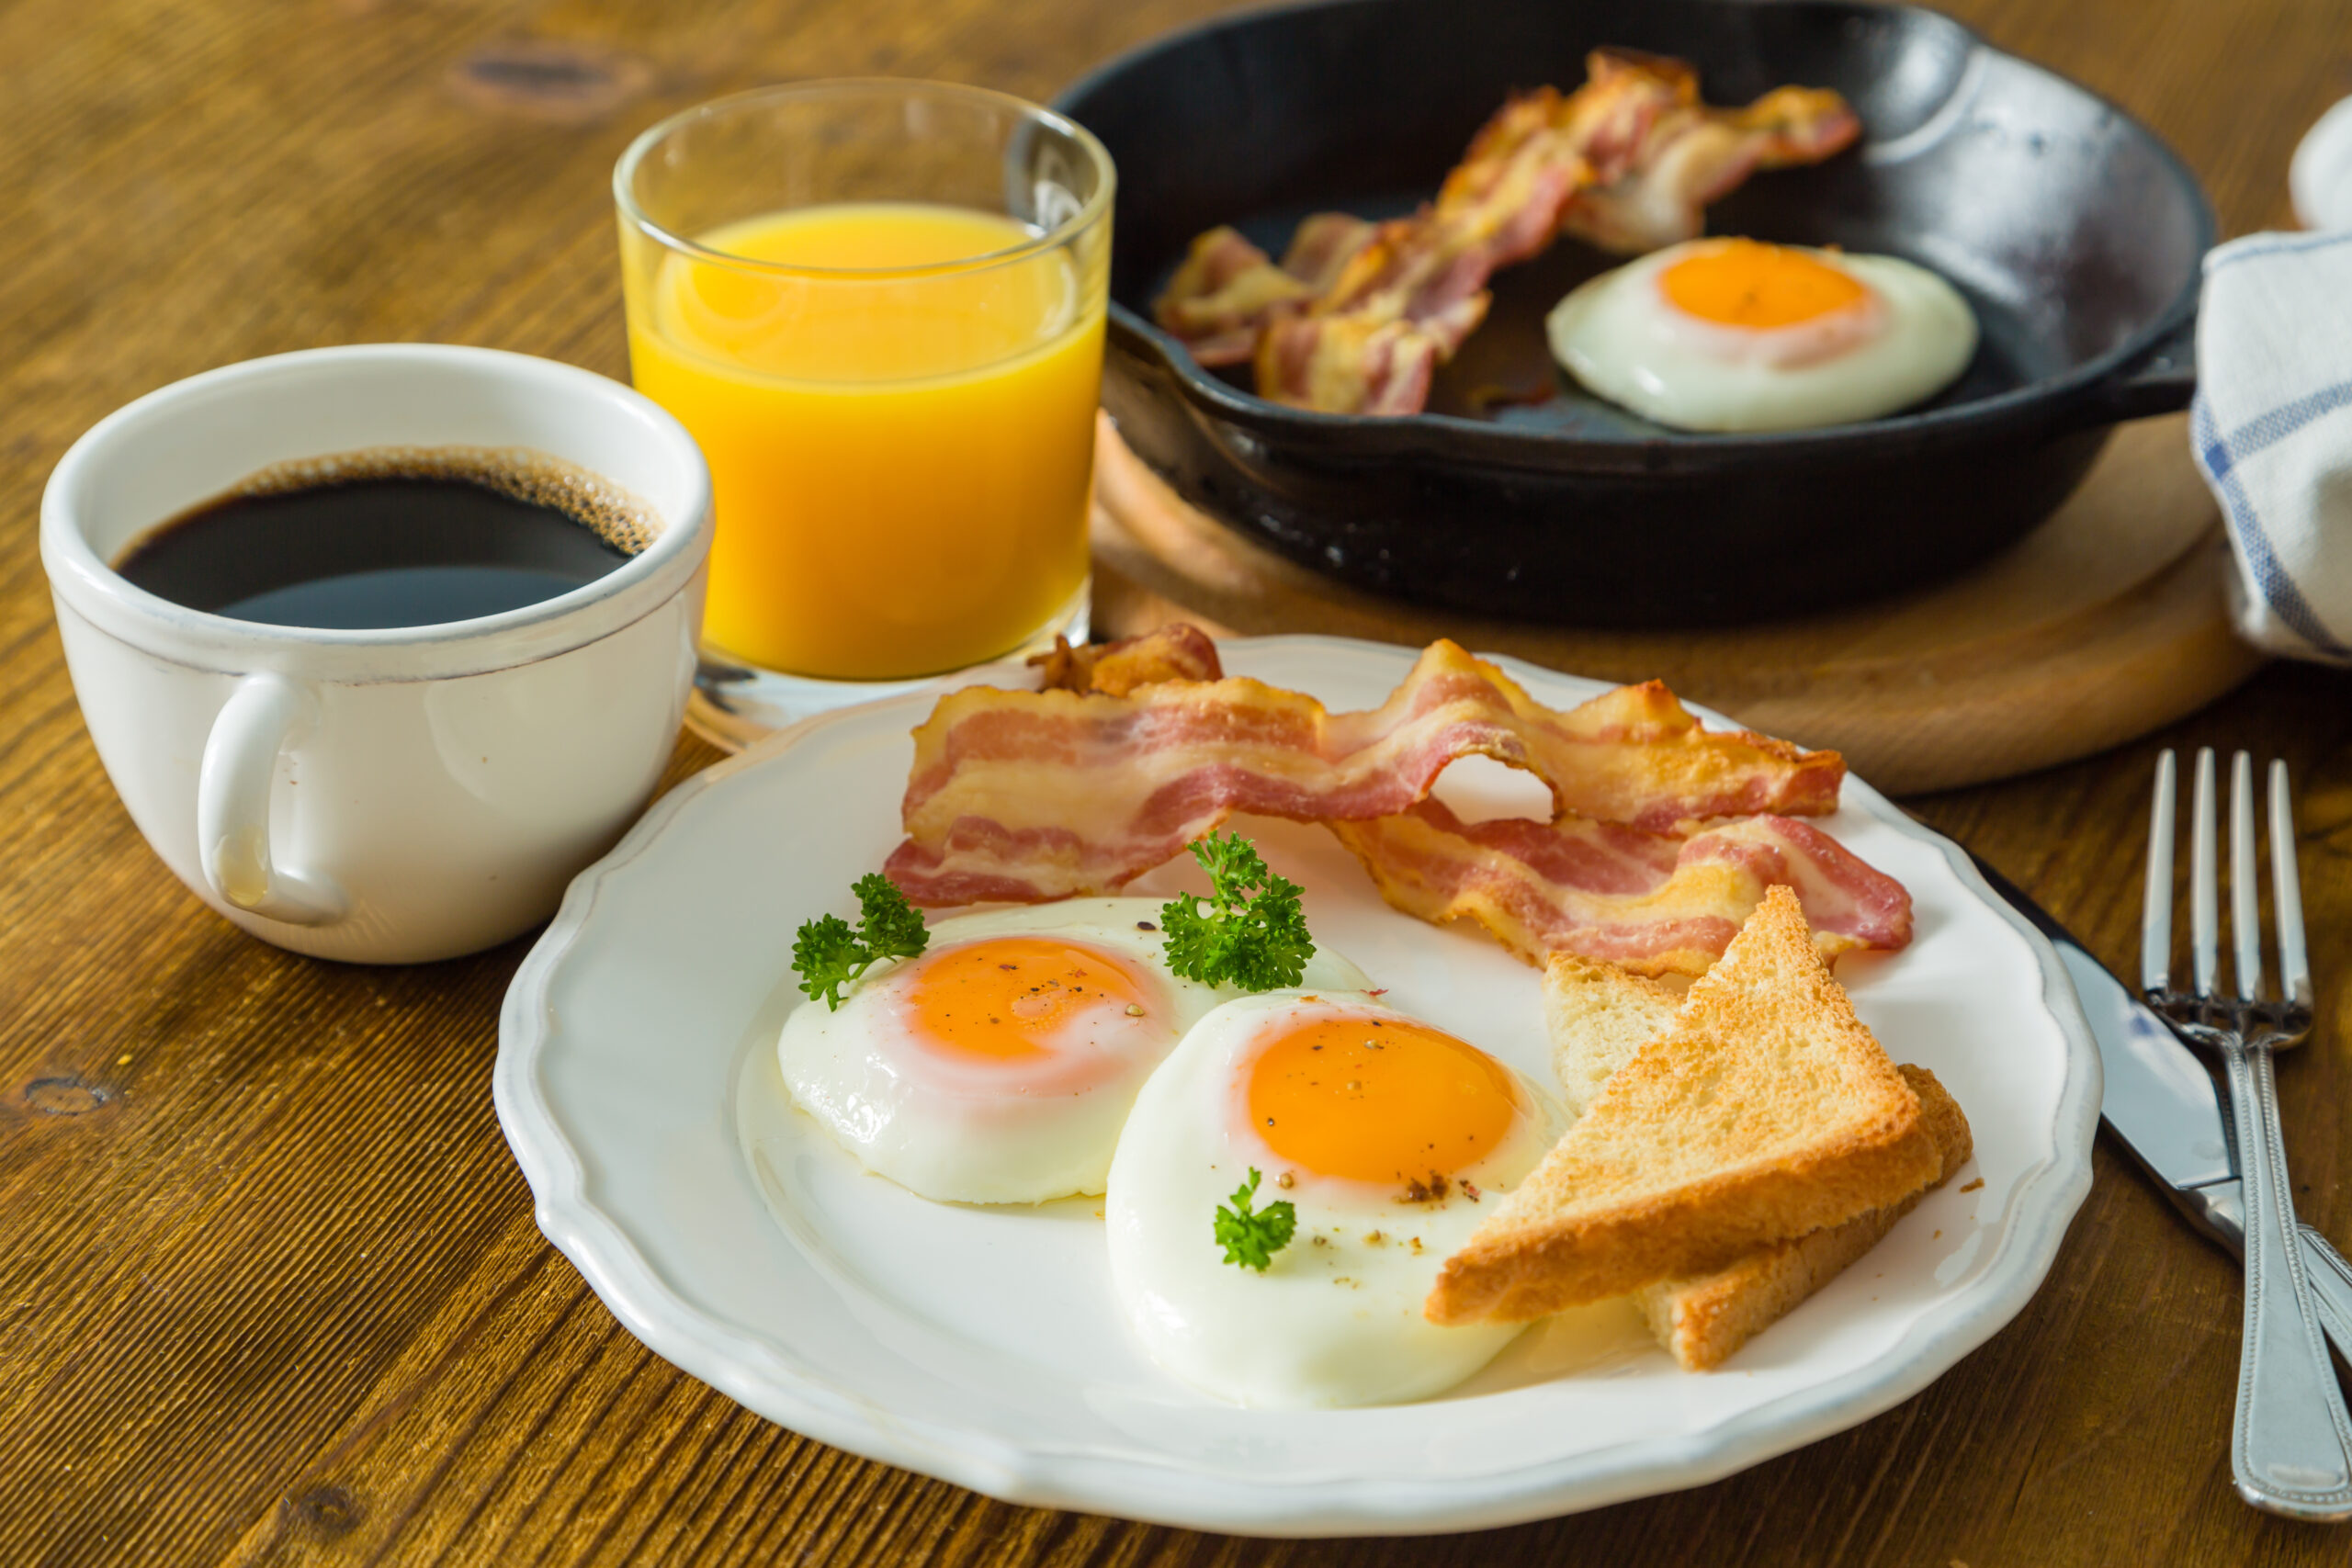 Empresa do Tang pretende dominar os cafés das manhãs; entenda como